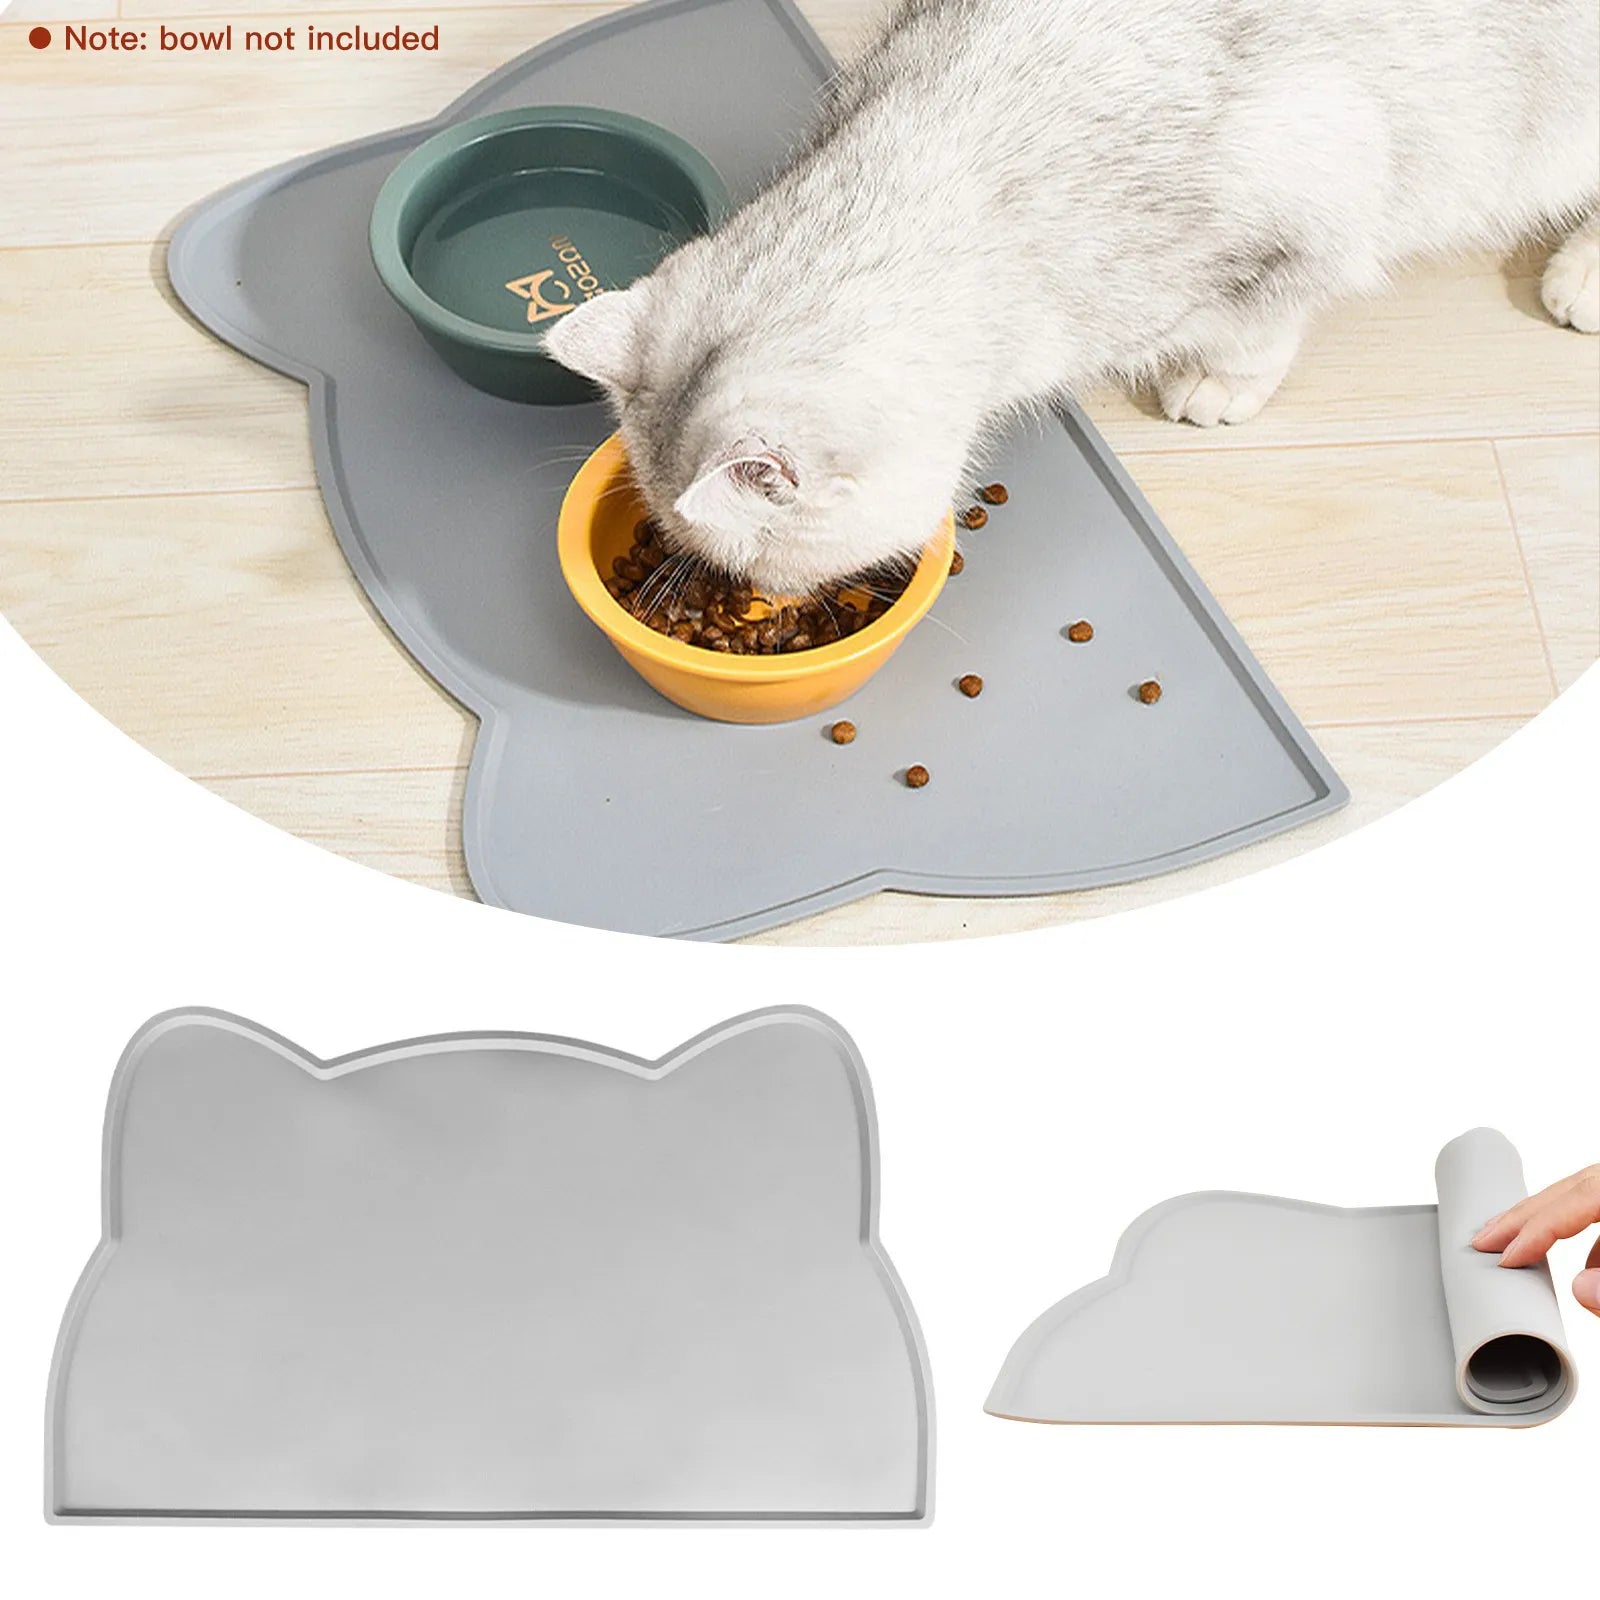 Pet Silicone Mat: Waterproof Food & Drinking Pad for Dog Cat  petlums.com   